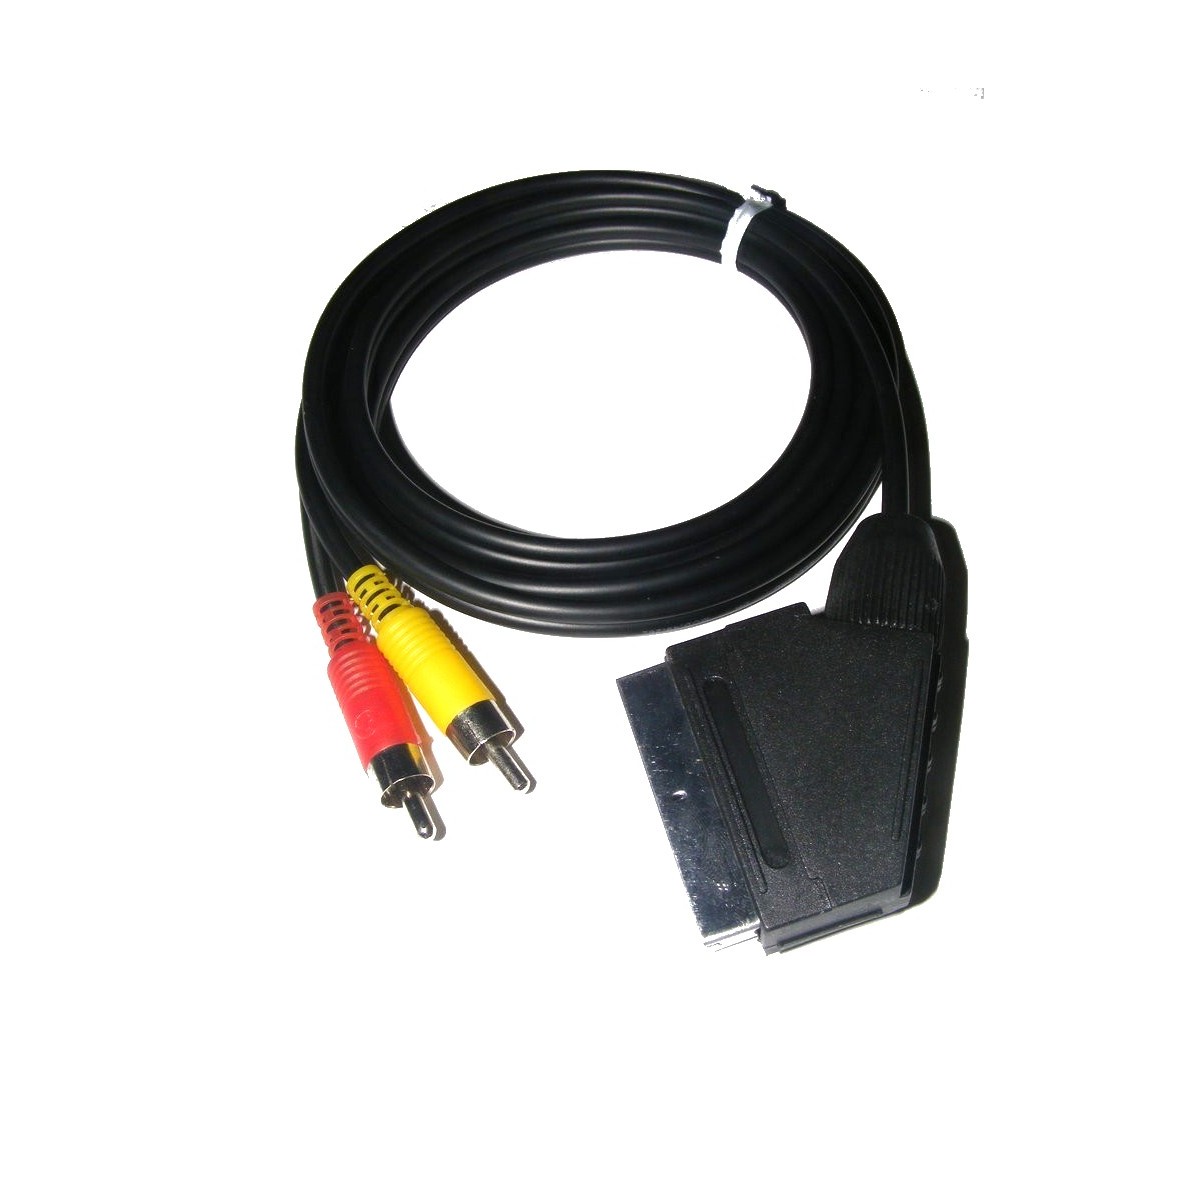 Cable euroconector AV mono estándar